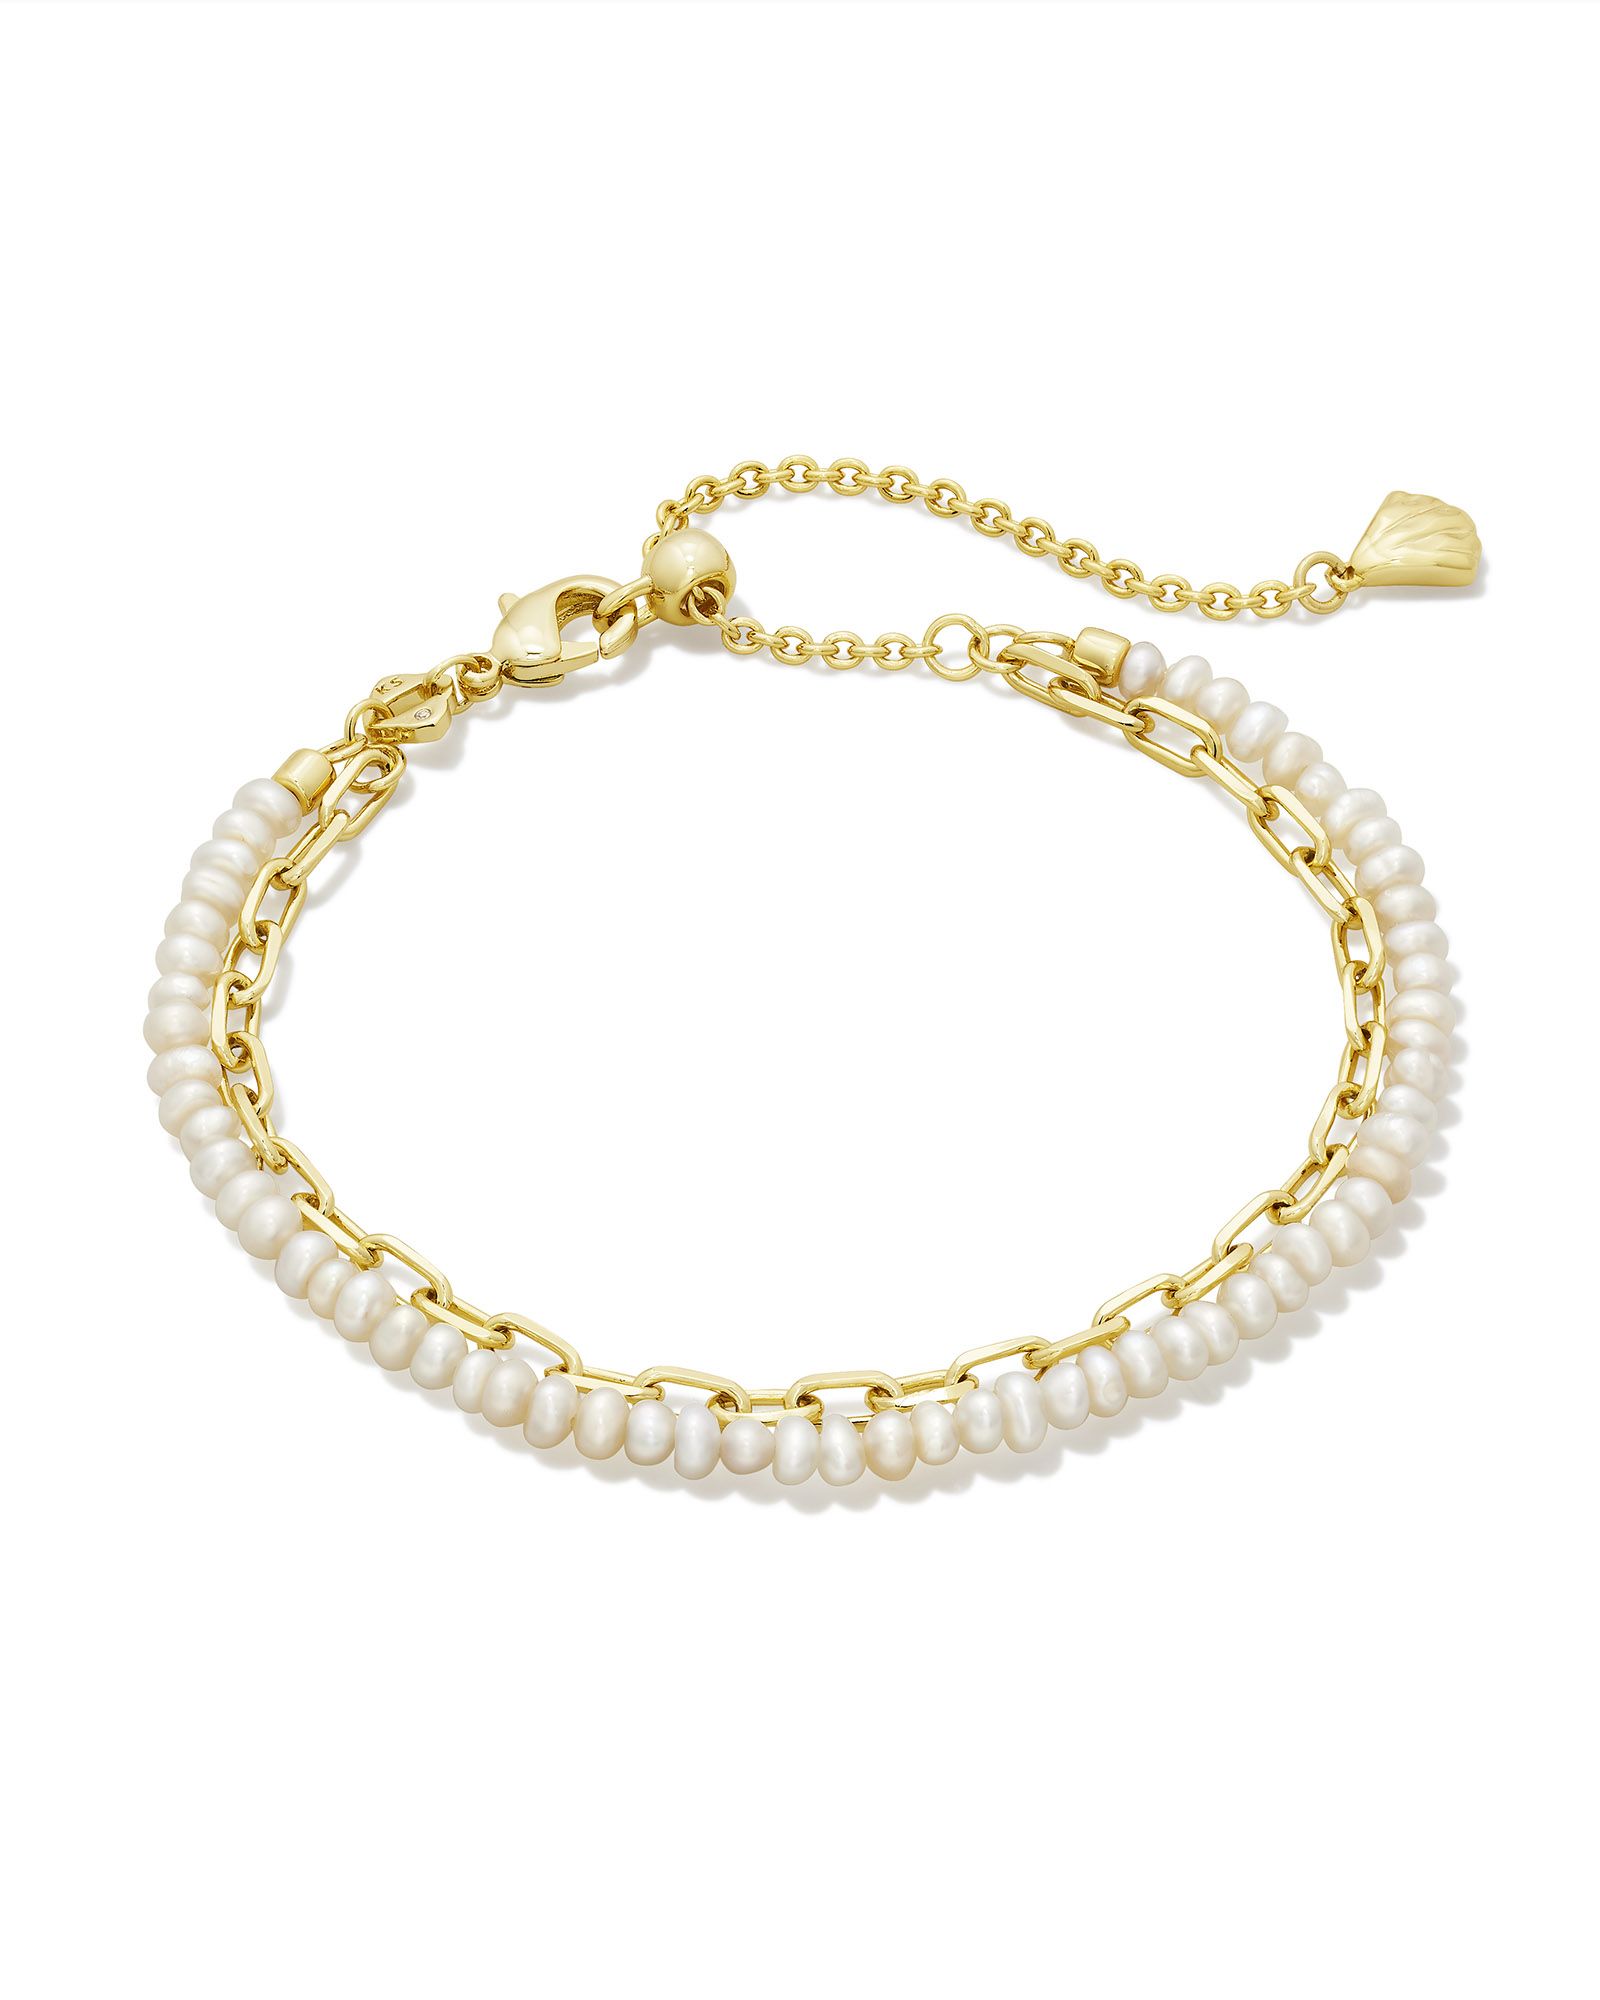 Lolo Gold Multi Strand Bracelet in White Pearl | Kendra Scott